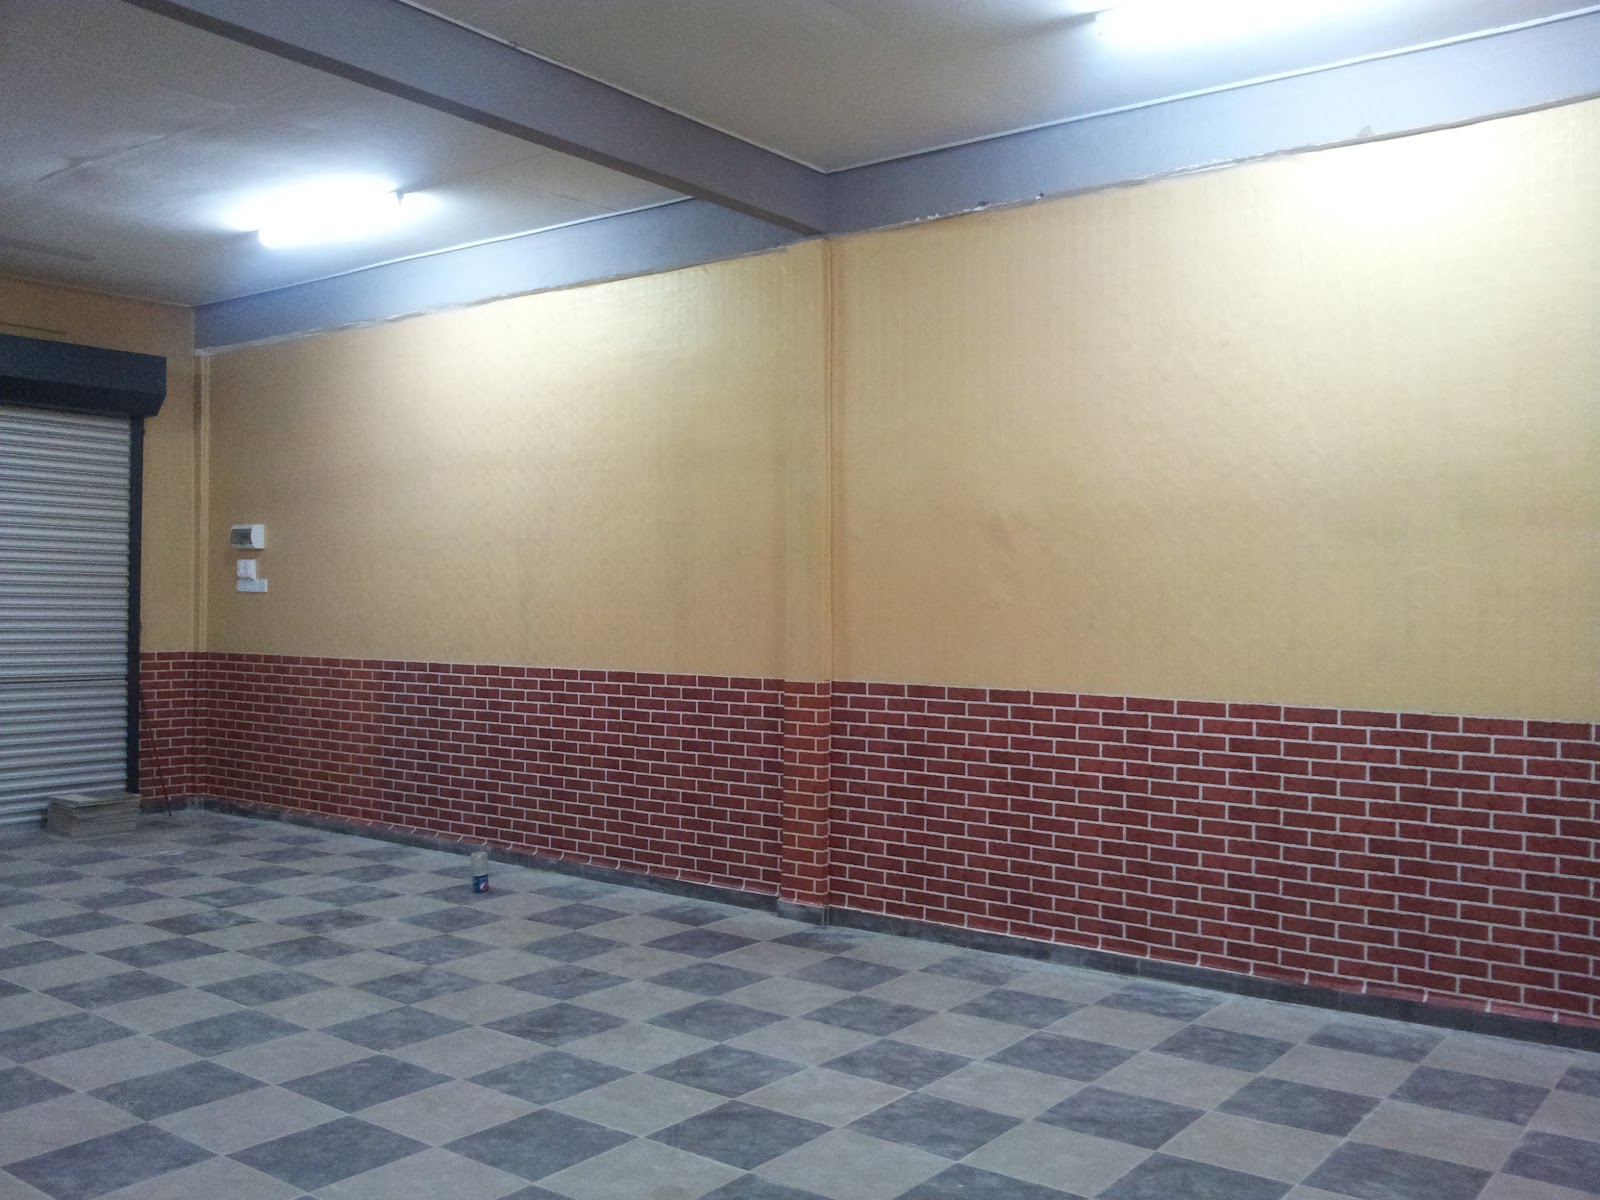 kedai wallpaper,wall,property,floor,ceiling,room